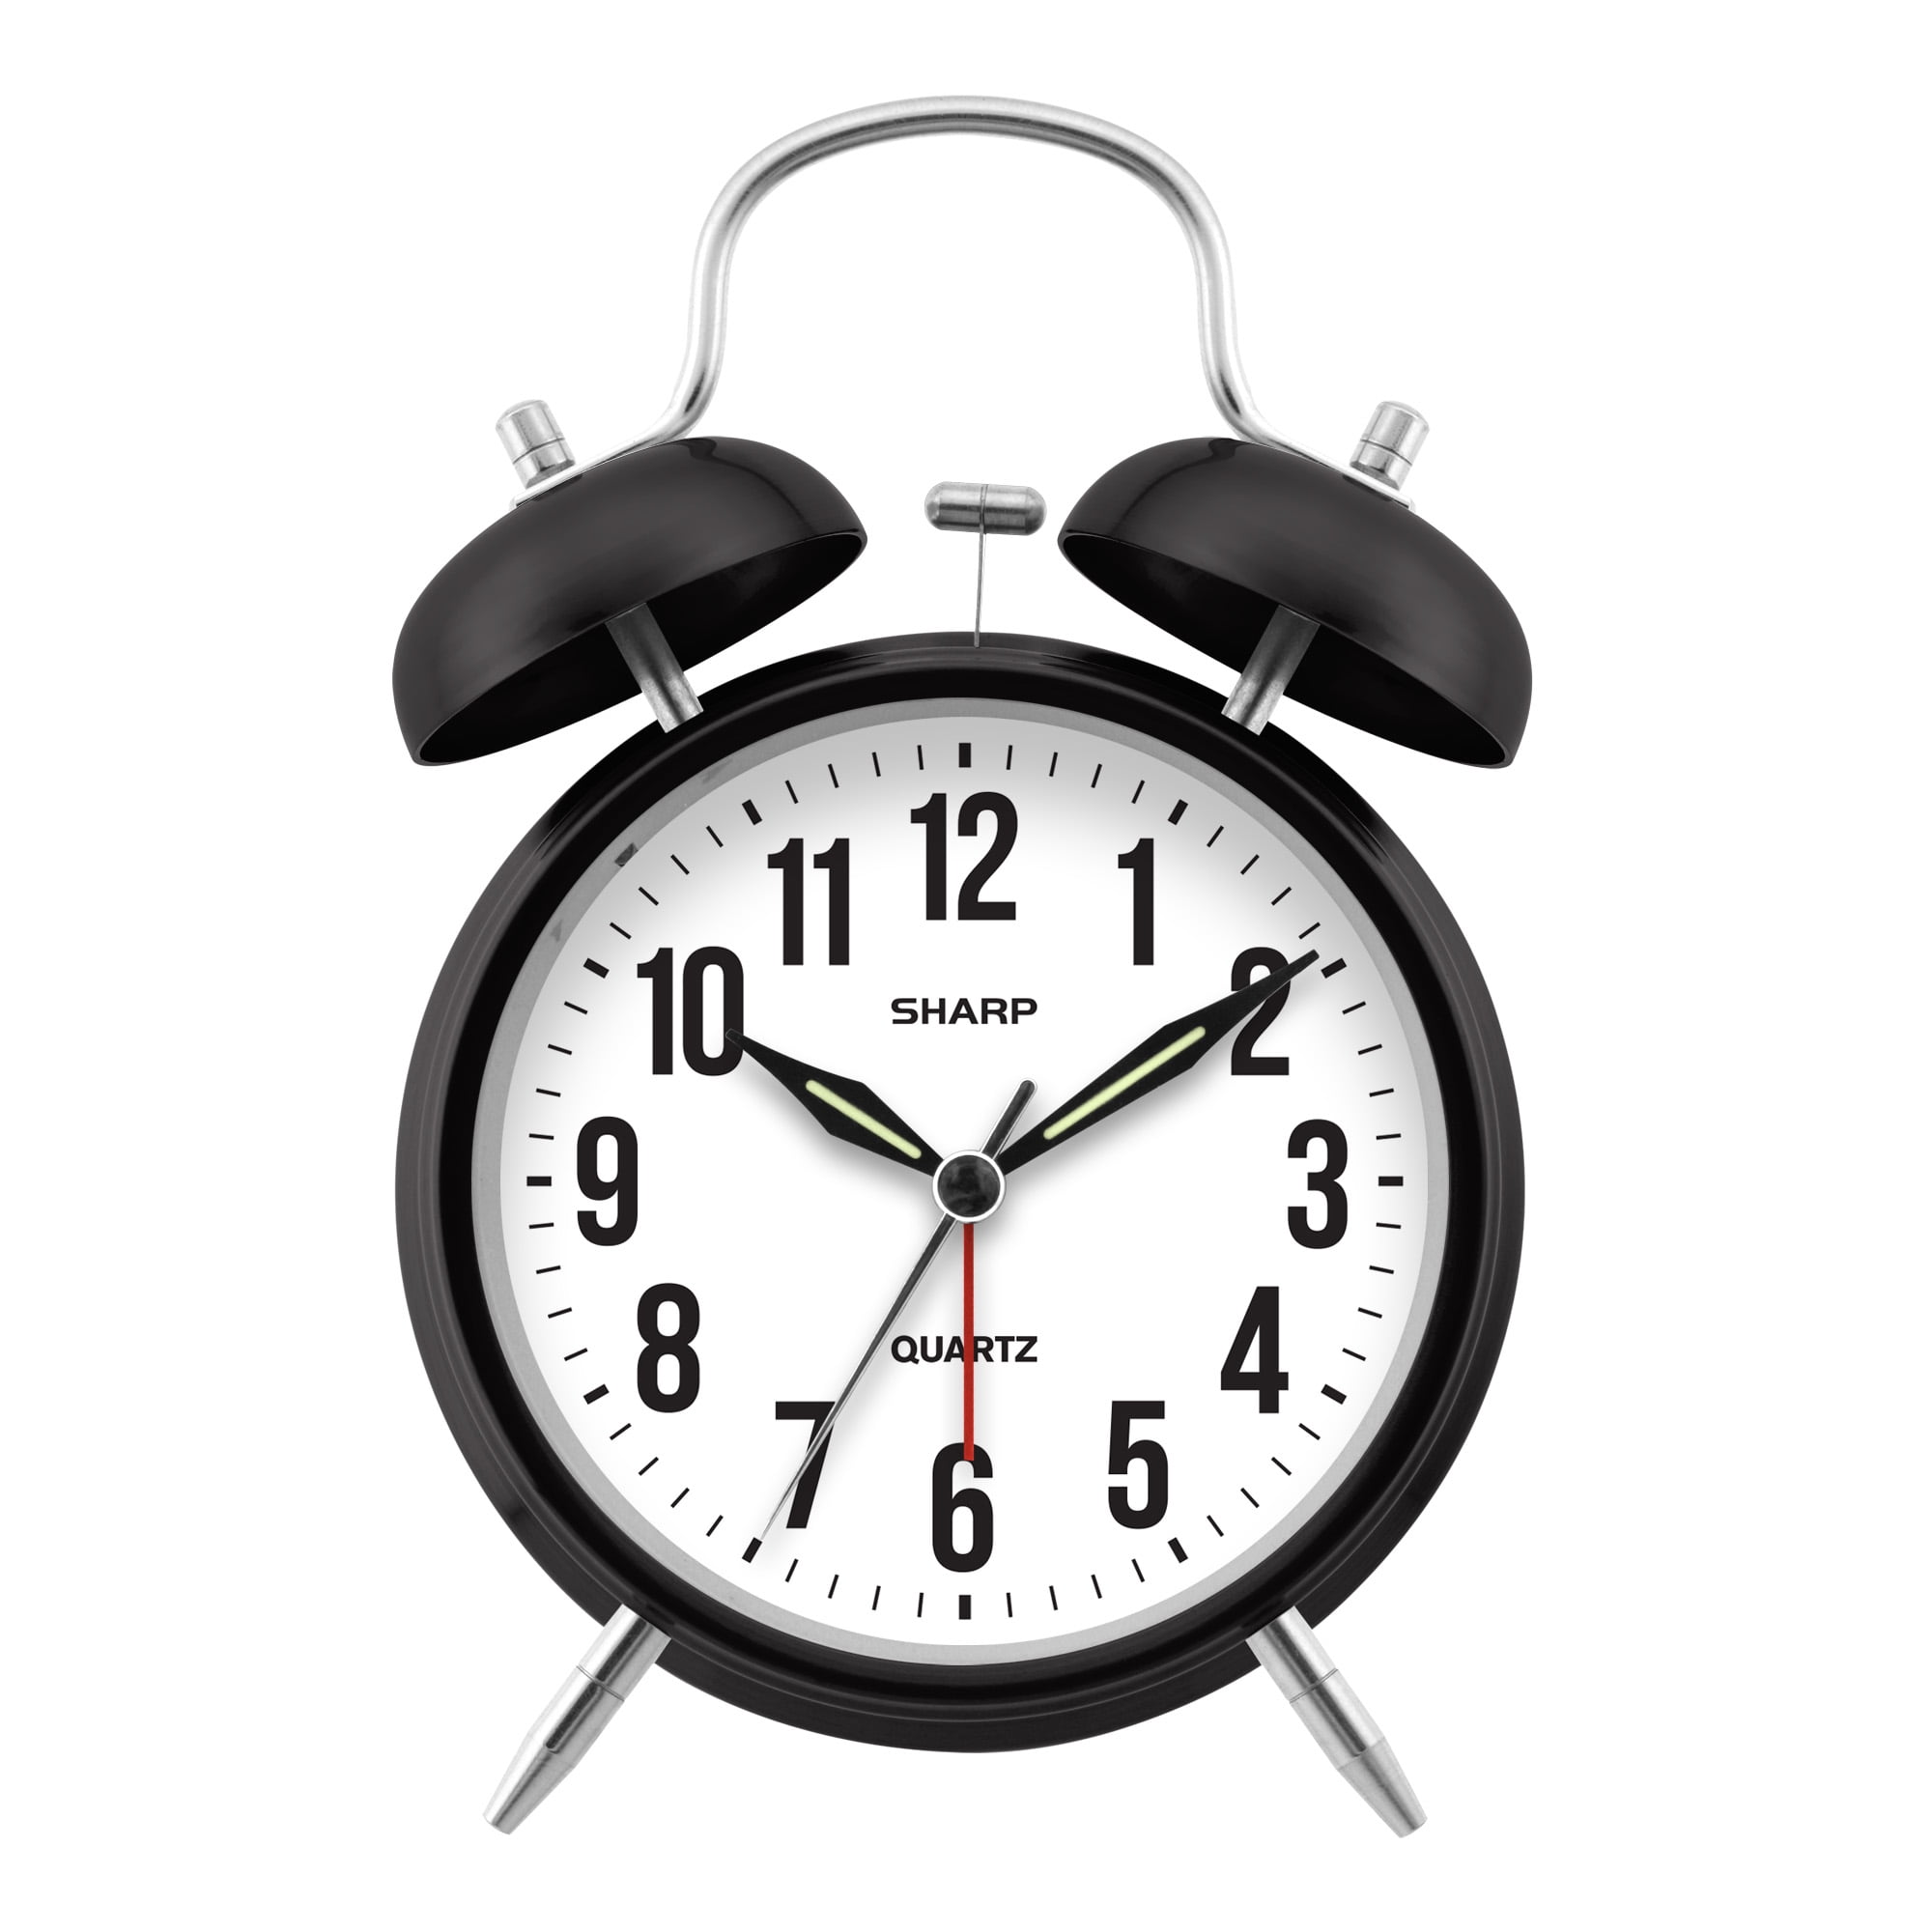 brand new Newcastle United bell alarm clock BNIP clk104 